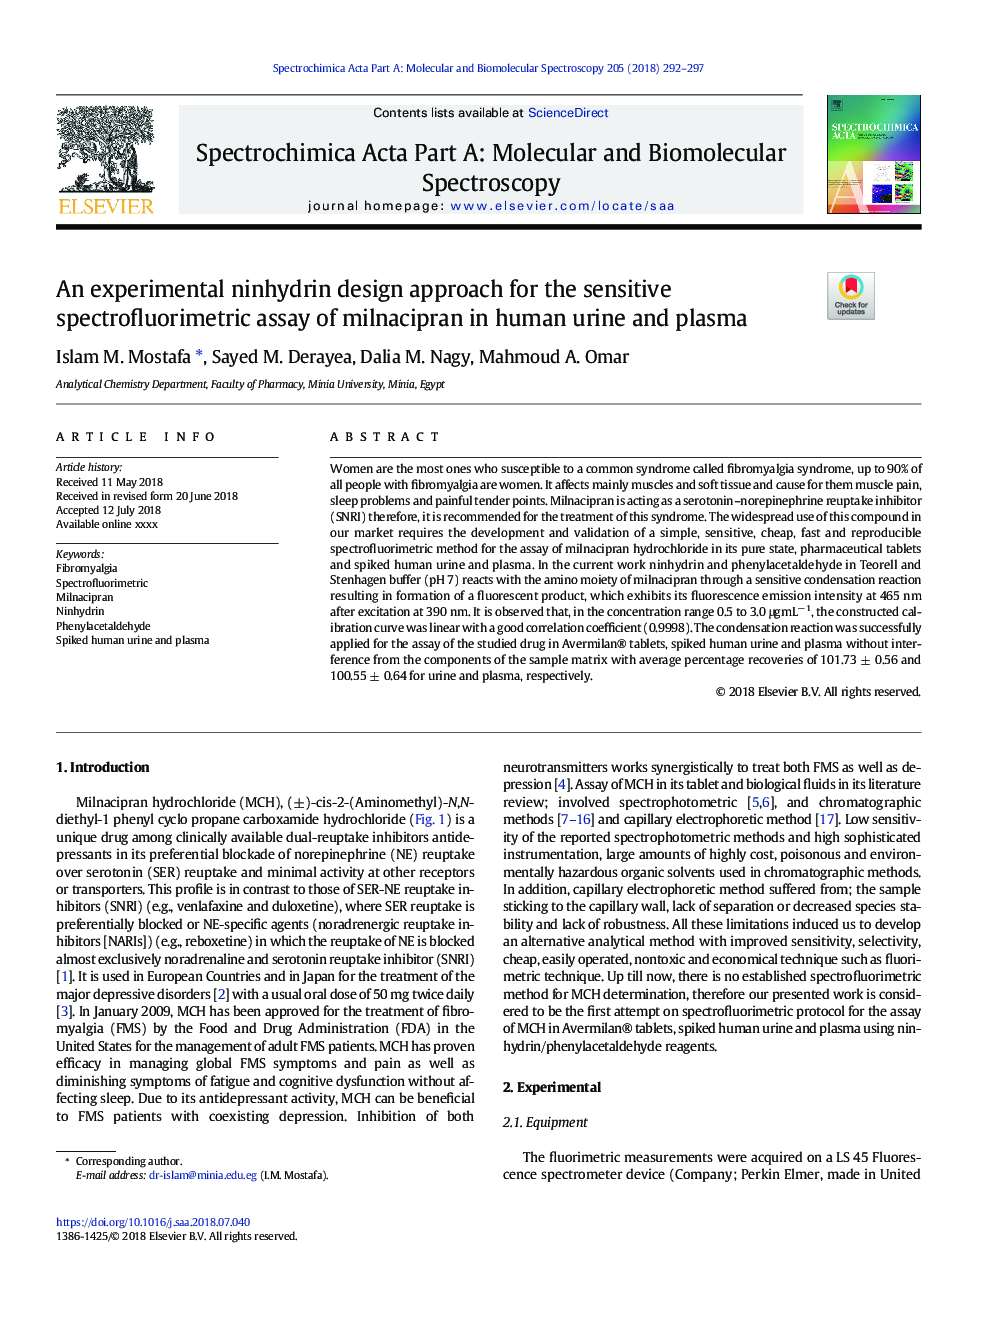 An experimental ninhydrin design approach for the sensitive spectrofluorimetric assay of milnacipran in human urine and plasma